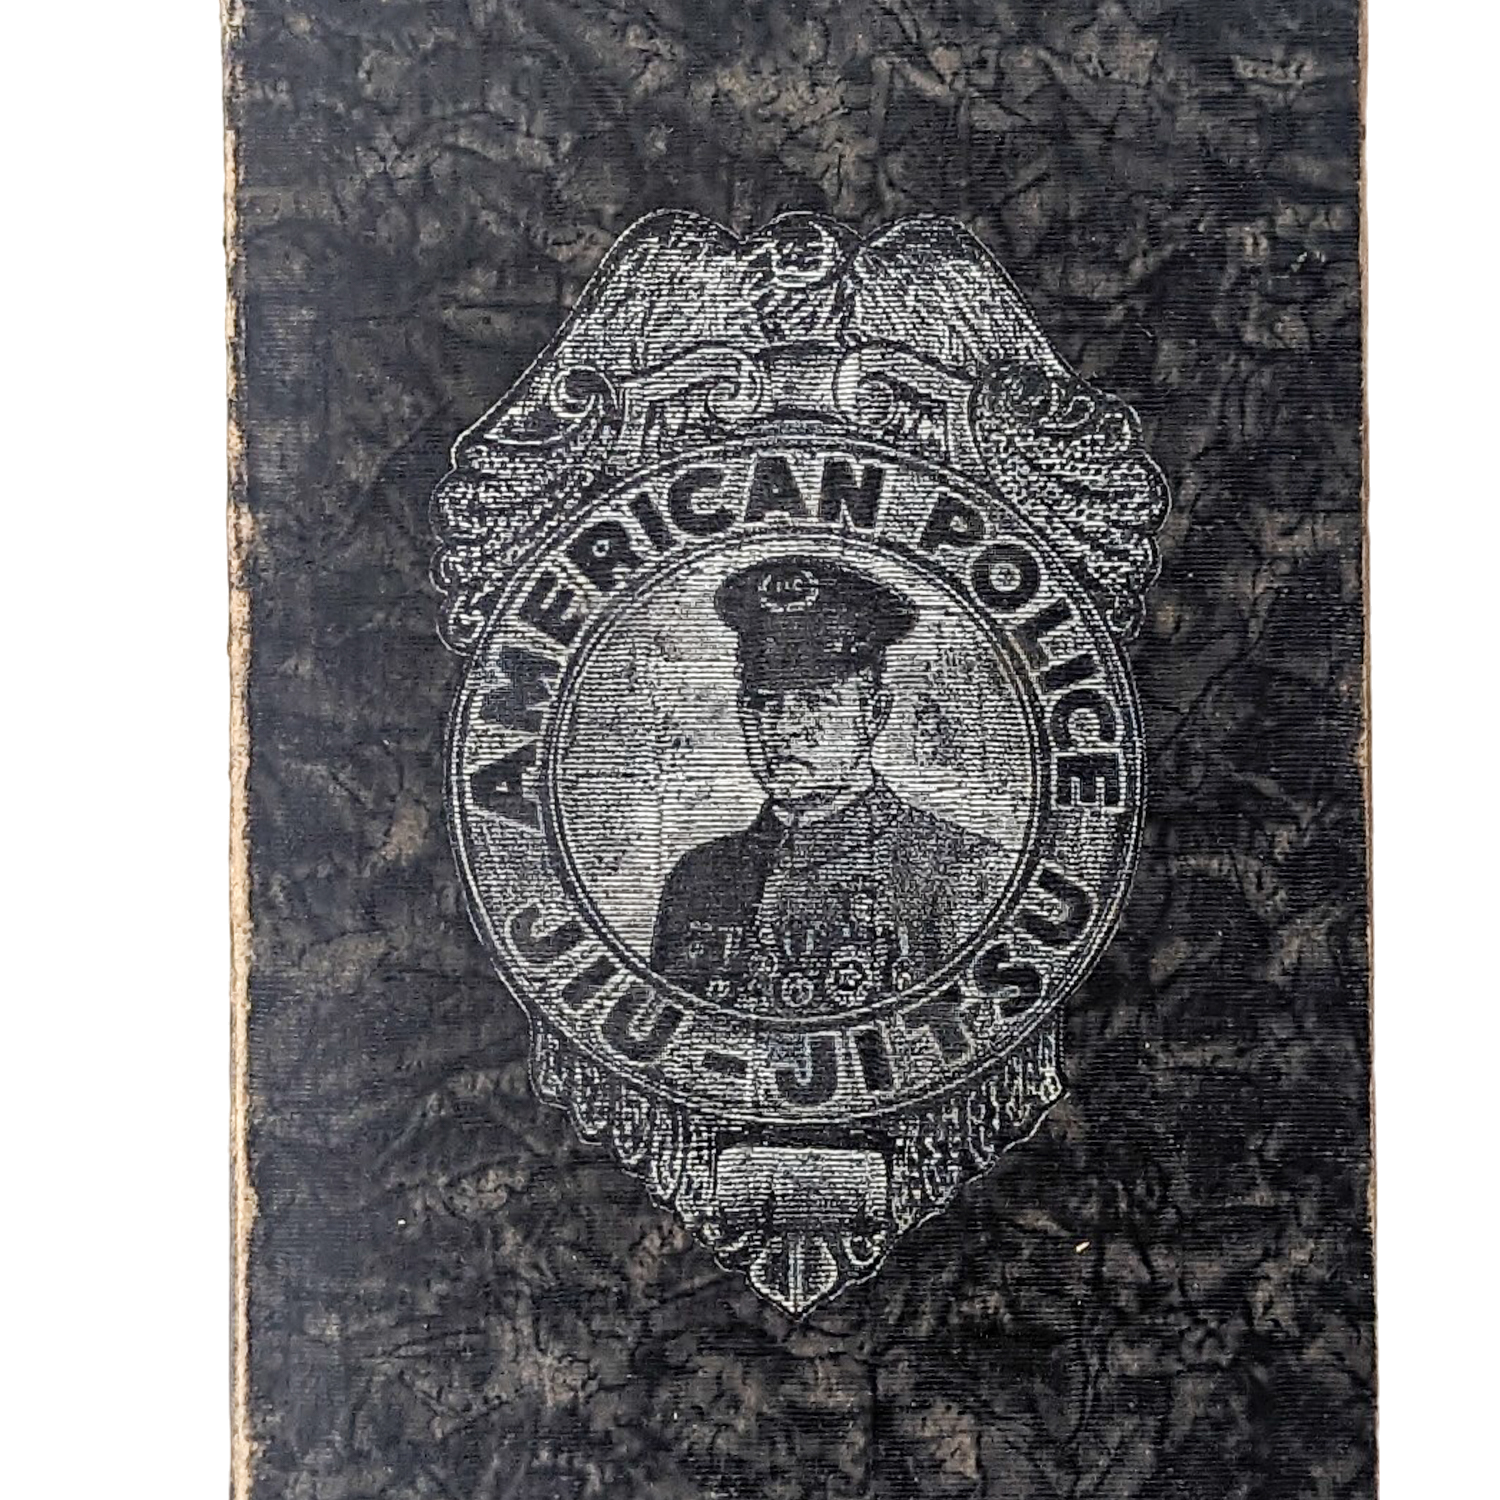 Rare 1937 American Police Jiu Jitsu Guide Book